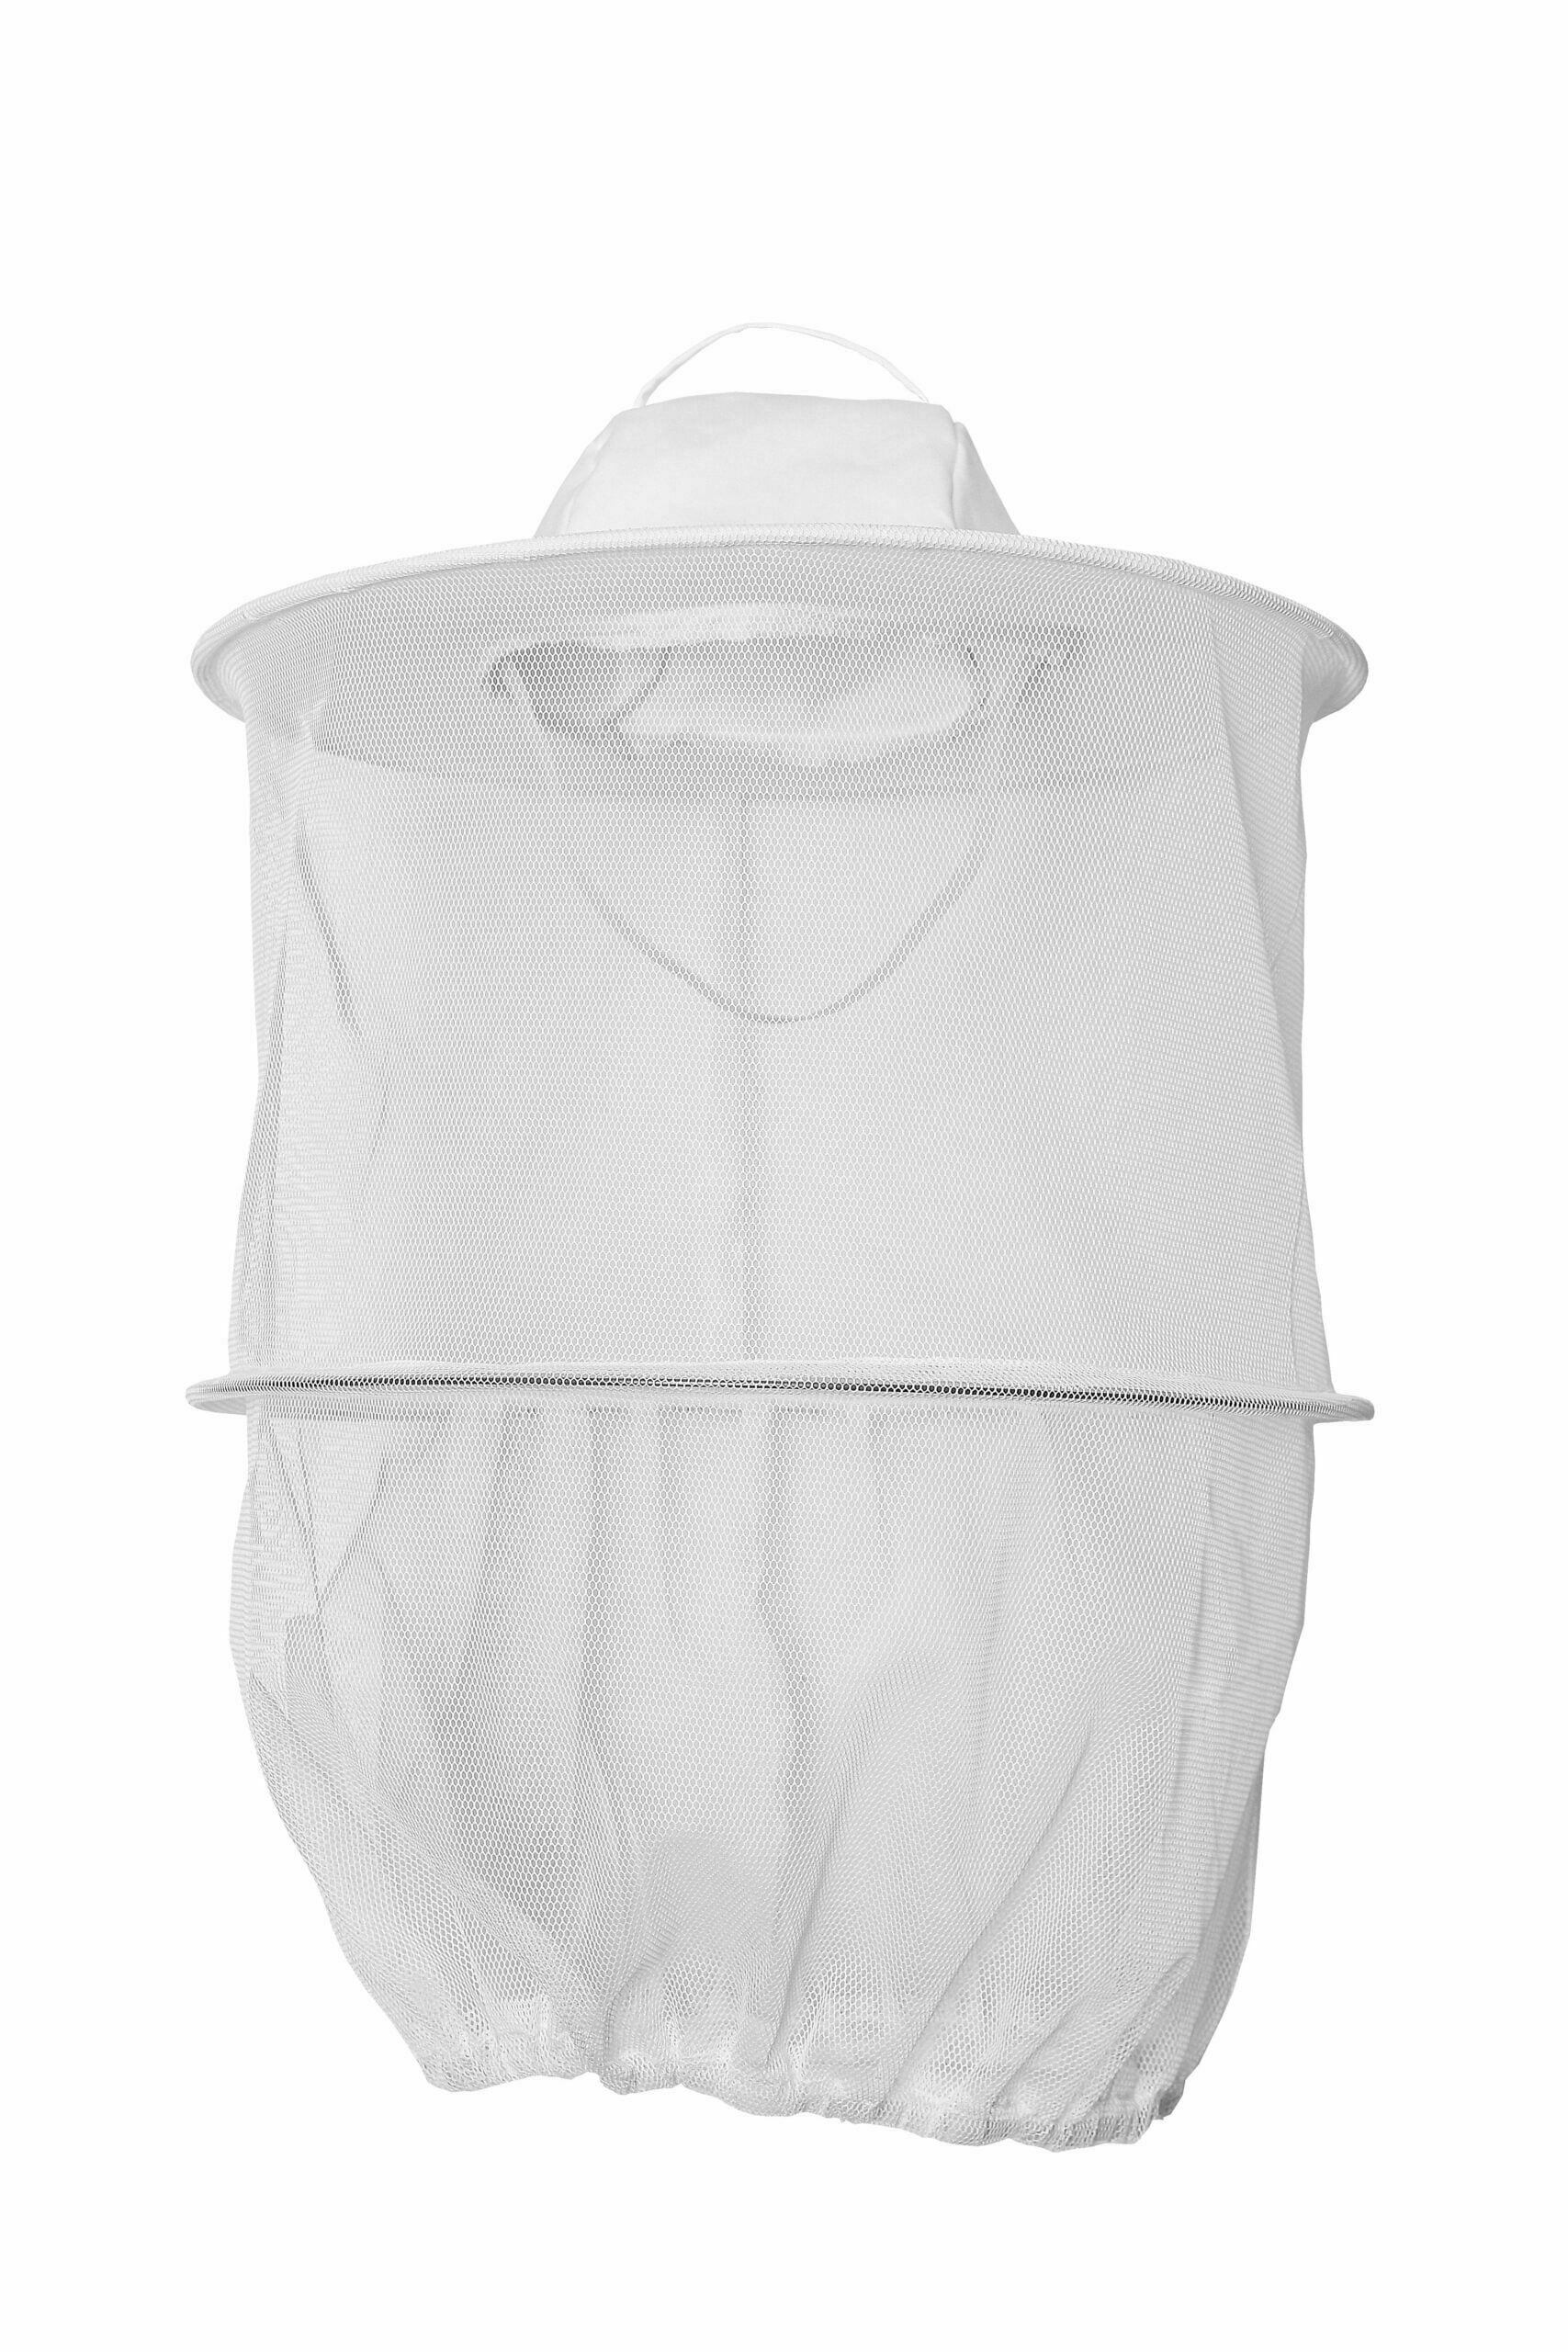 Bee White Polyester Mesh Veil Hat Ventilated Standard | Safta Bee